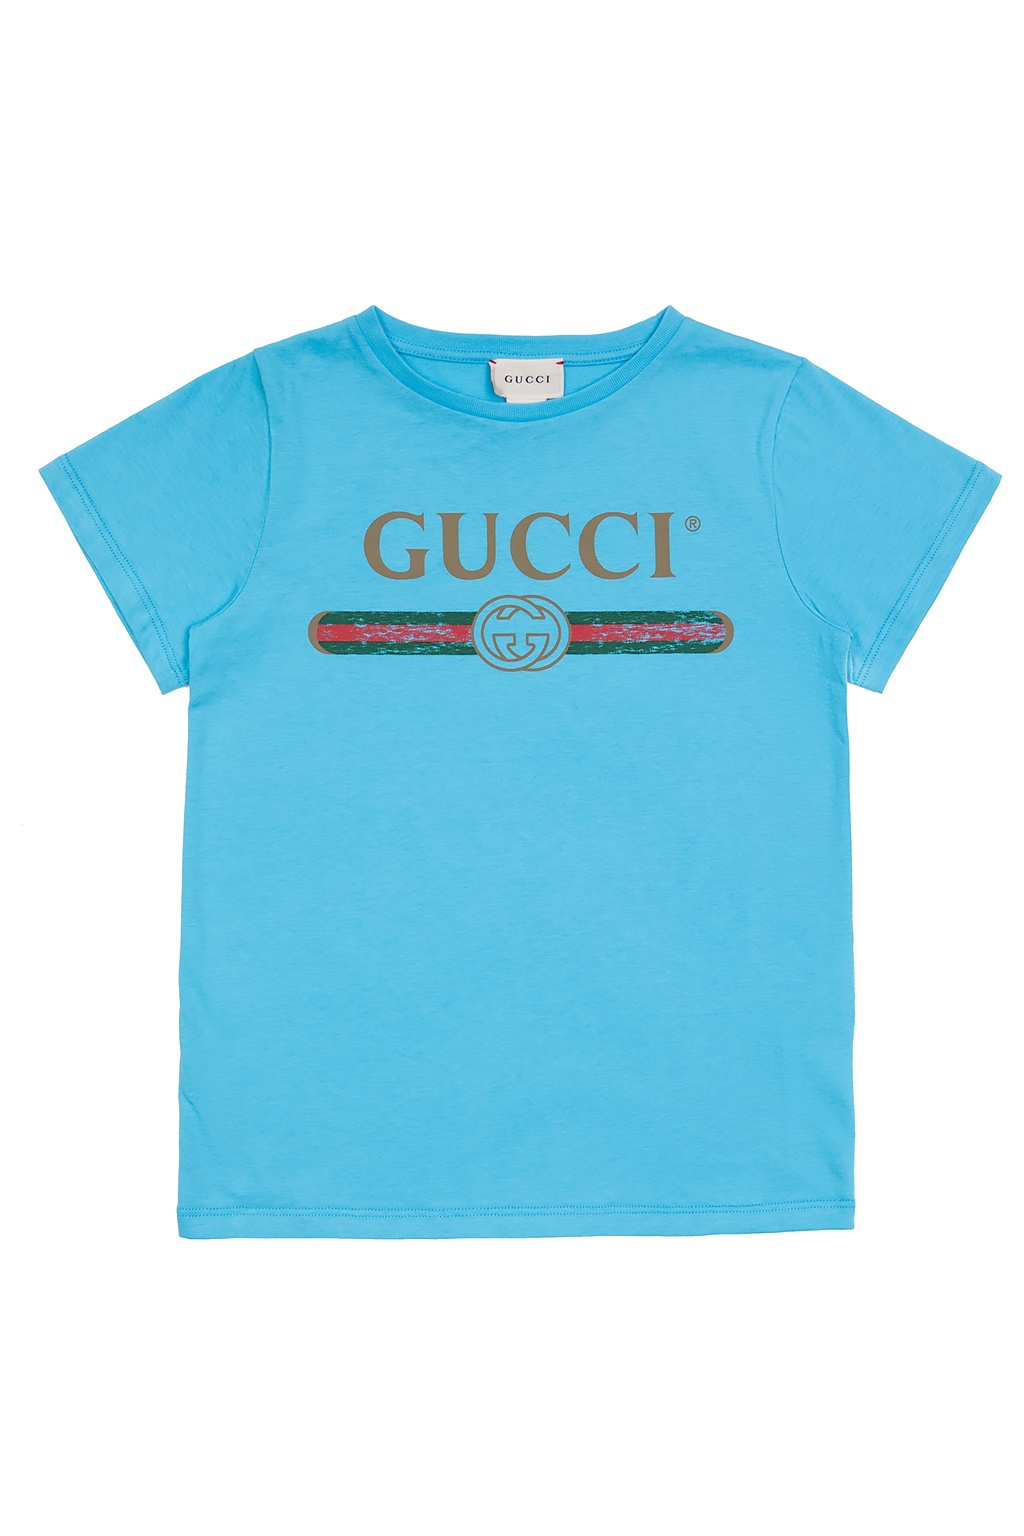 T-shirt with logo Gucci Kids - Vitkac Singapore